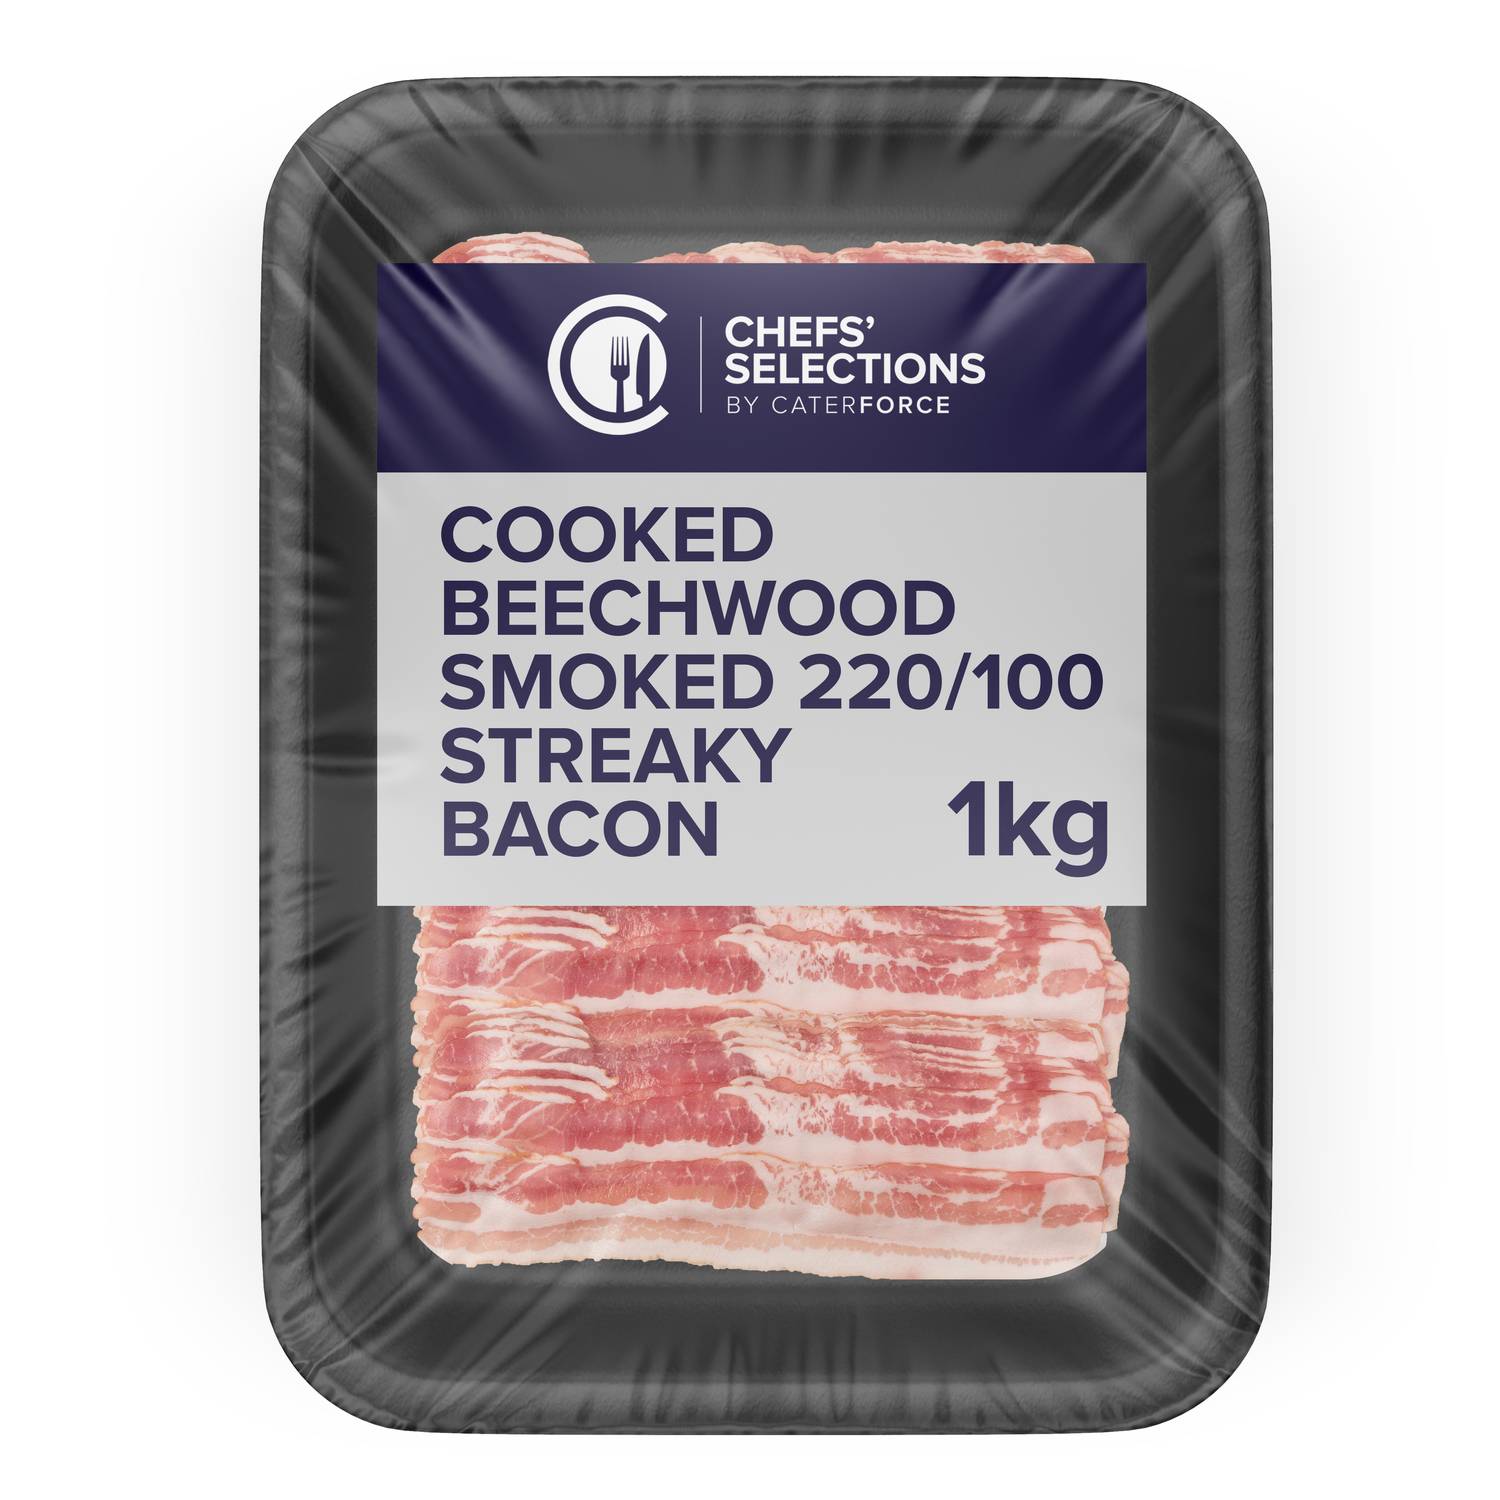 Chefs’ Selections Cooked Beechwood Smoked 220/100 Streaky Bacon (8 x 1kg)